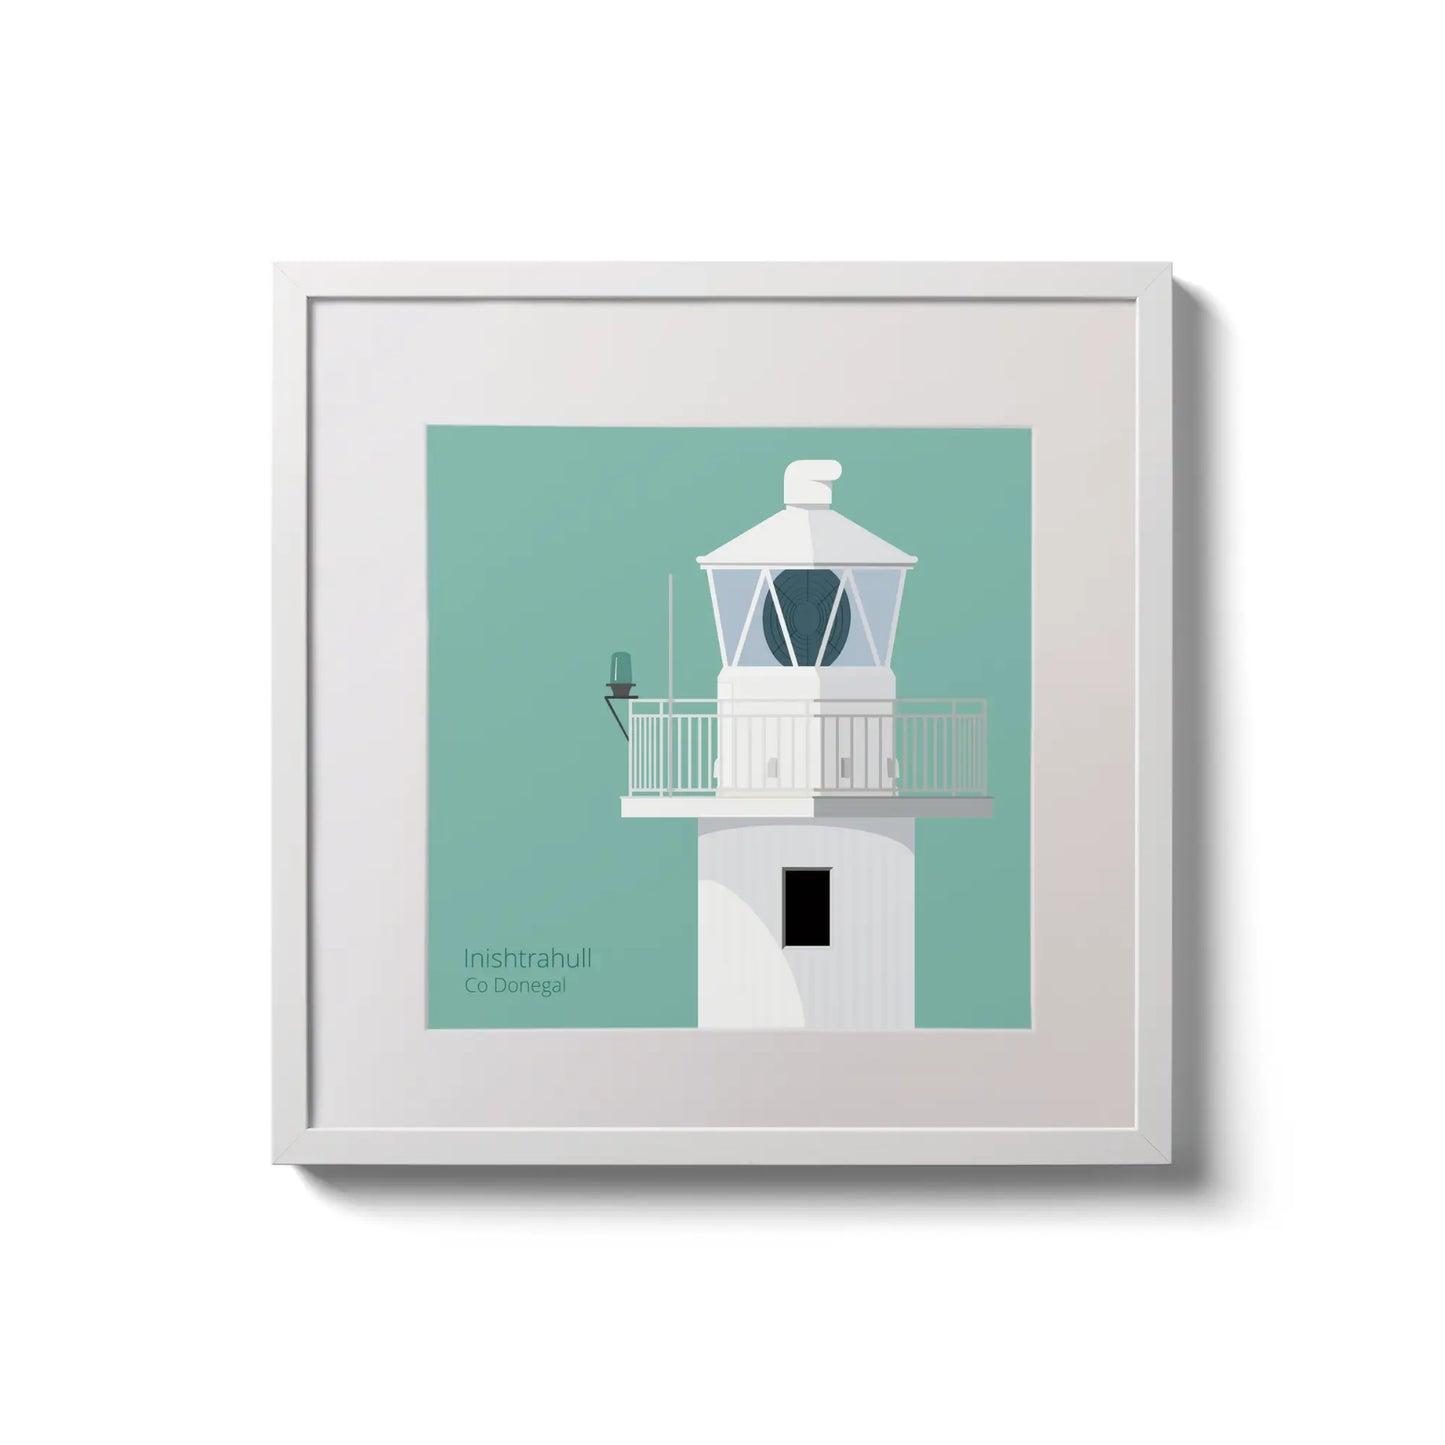 Illustration of Inishtrahull lighthouse on an ocean green background,  in a white square frame measuring 20x20cm.